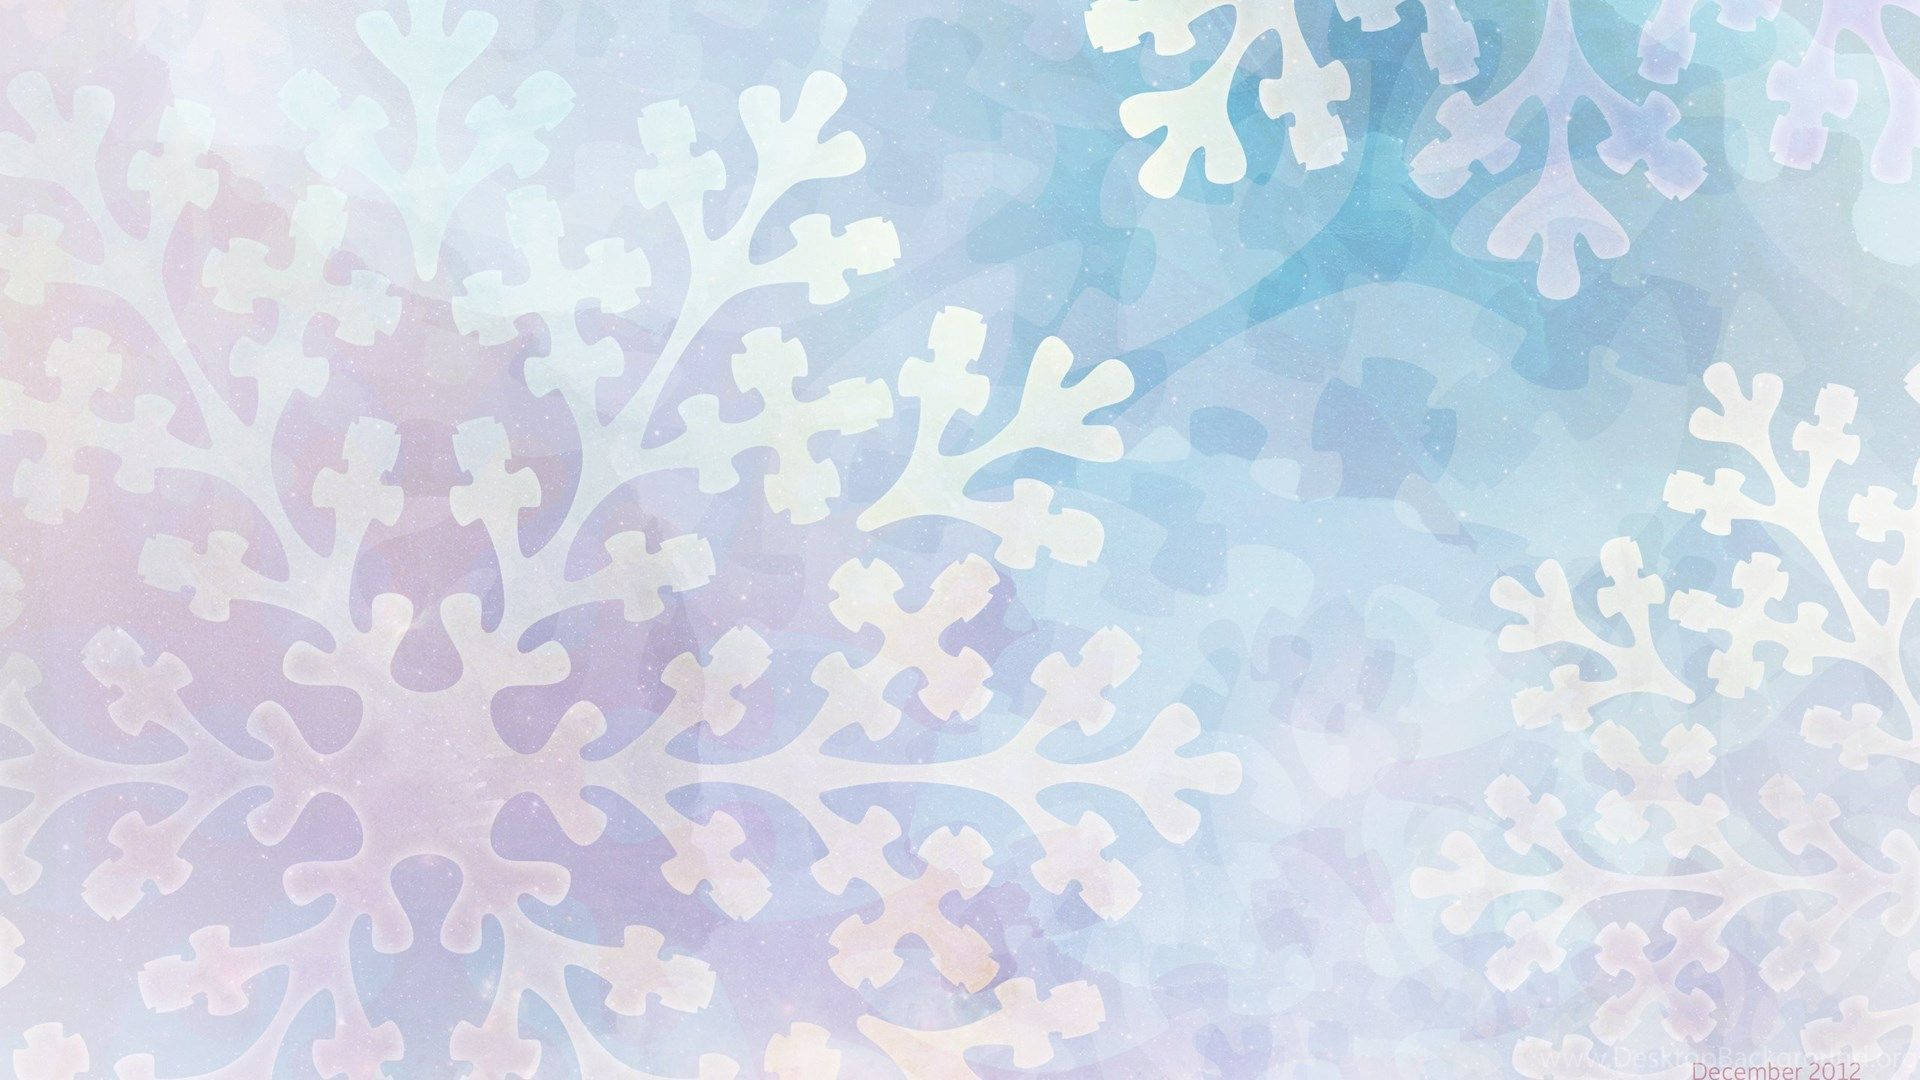 Aesthetic December Snowflake Background